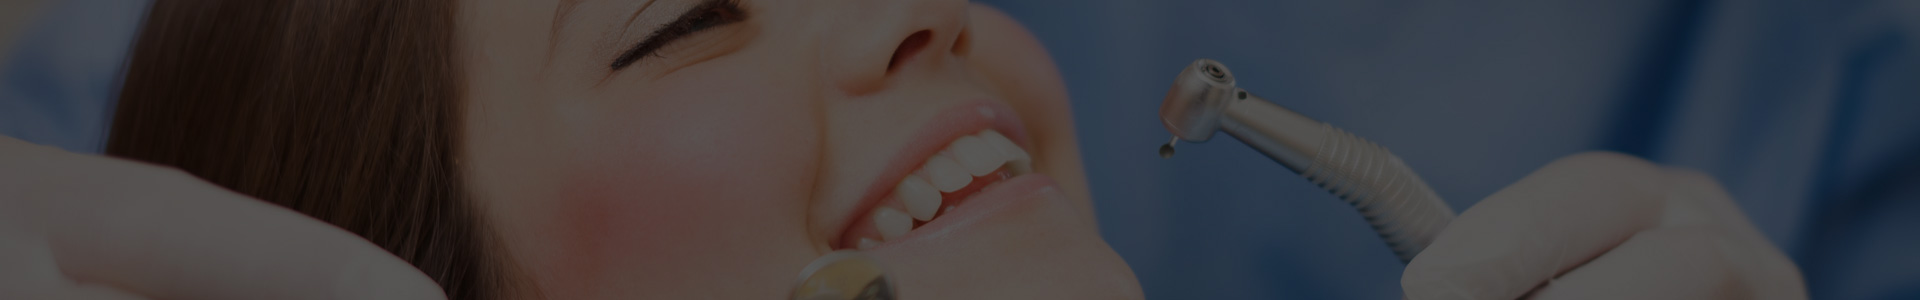 Best Dentist Melbourne | Cheap Dental Clinic Services Melbourne | Hawthorn East Dental